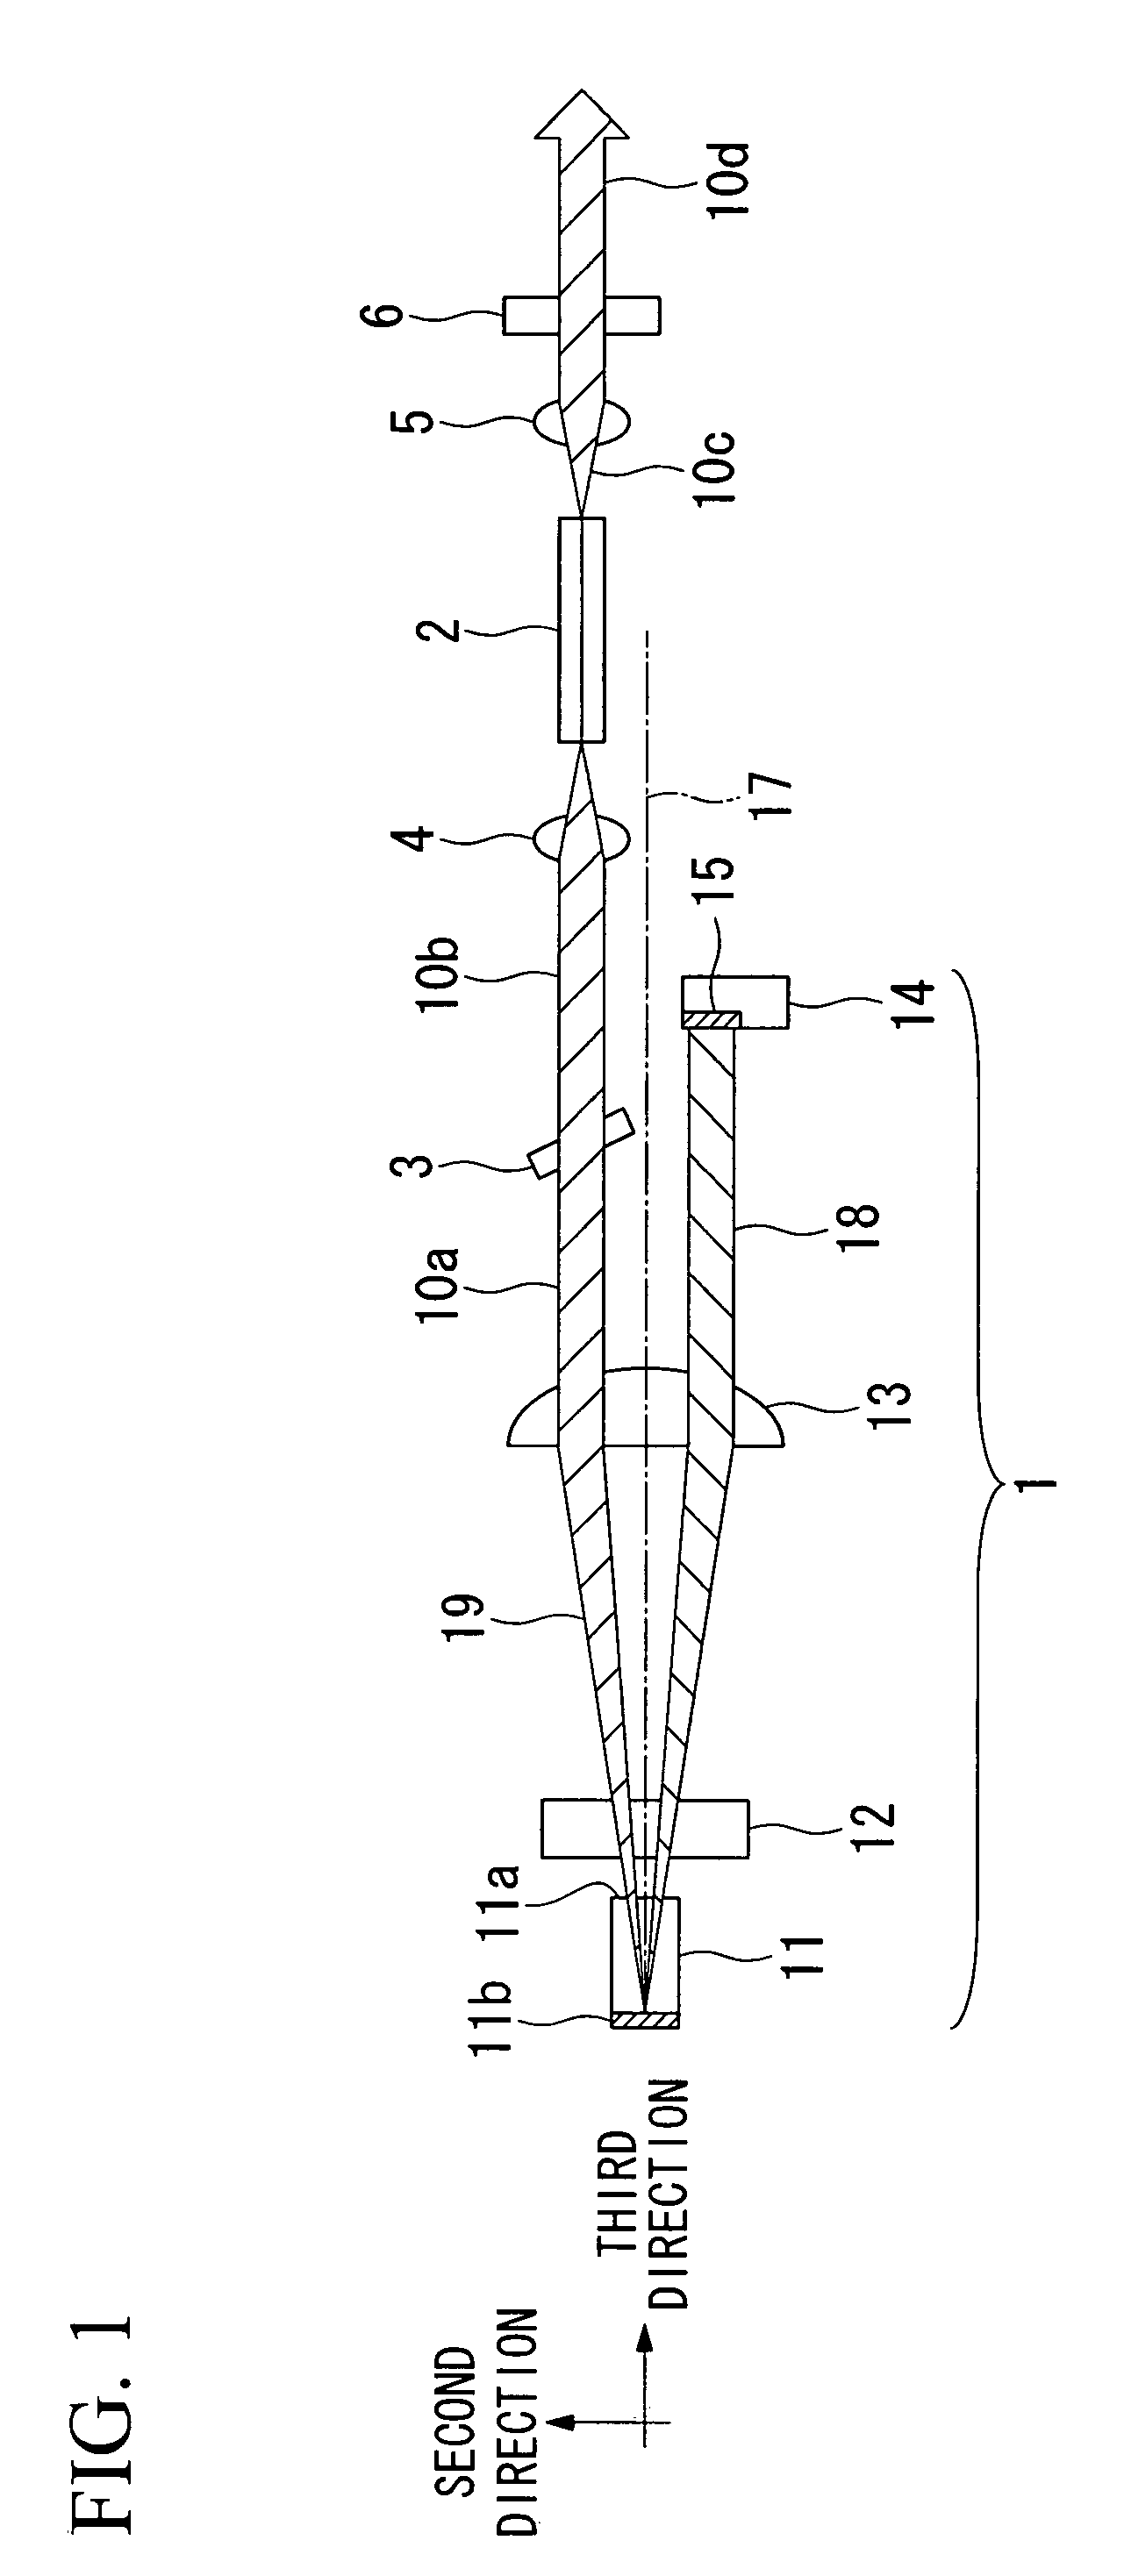 Apparatus and method of generating laser beam